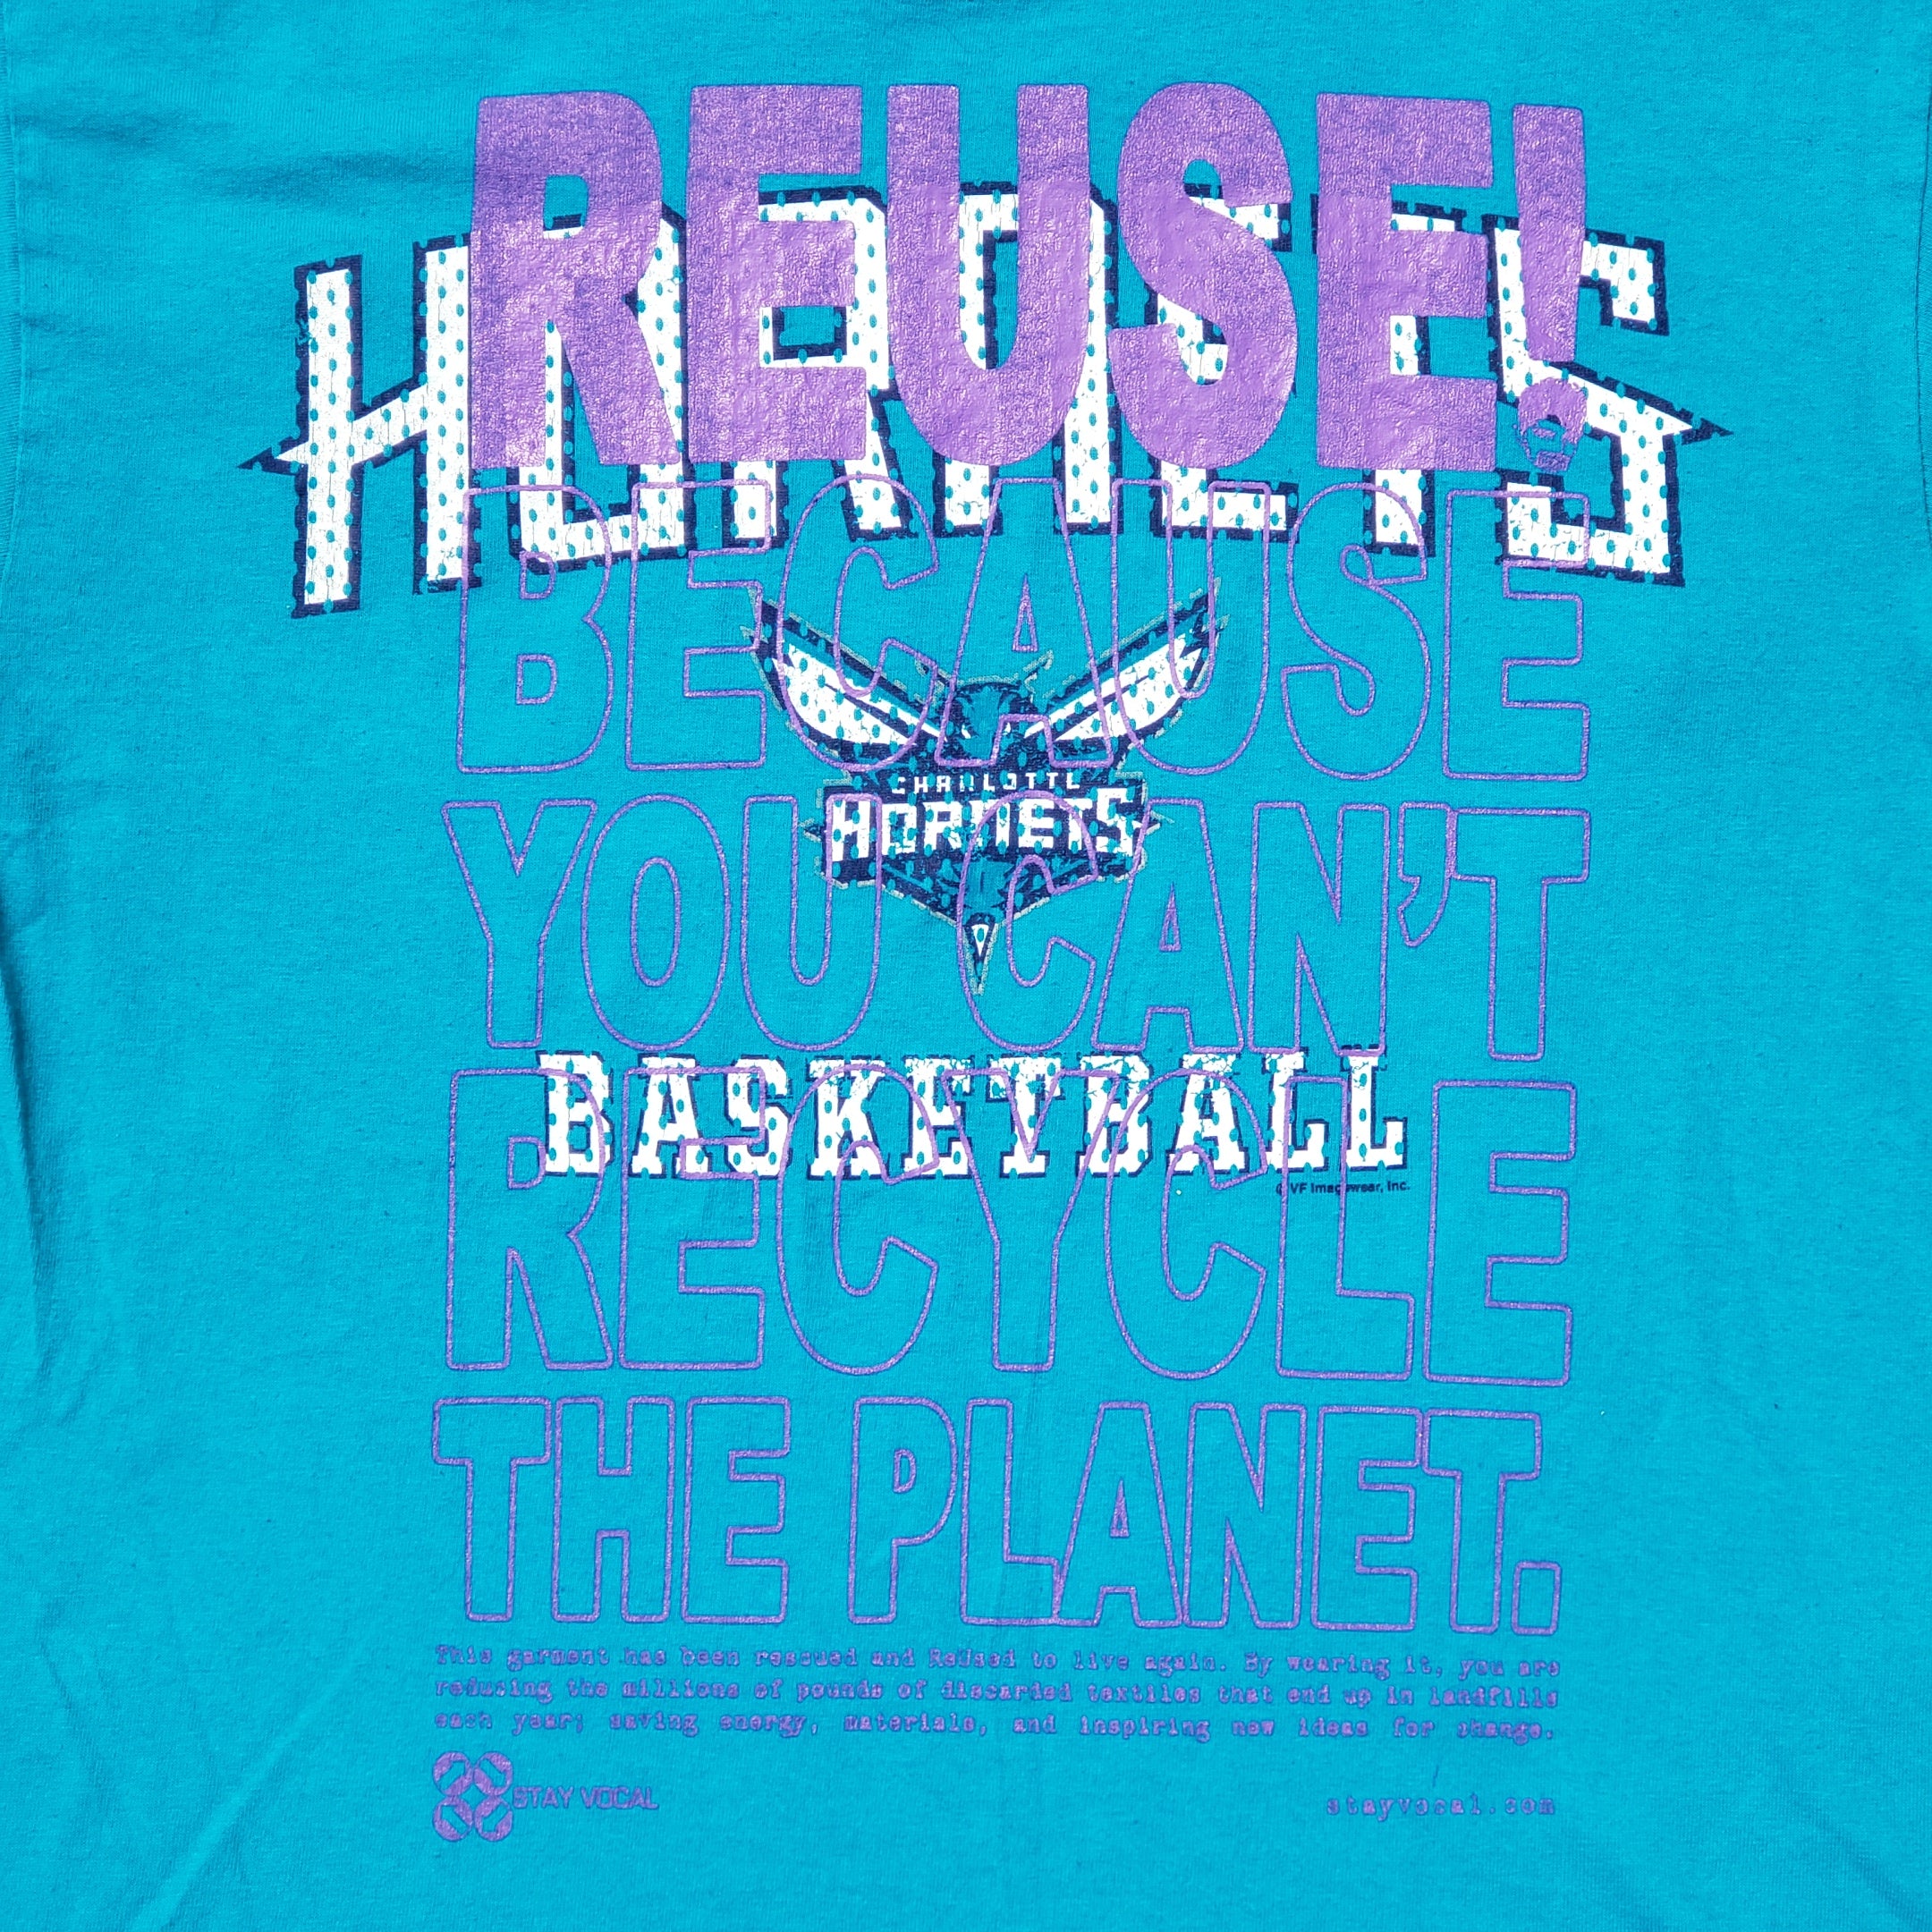 One of a Kind (Men's M) REUSE! Charlotte Hornets Basketball T-Shirt